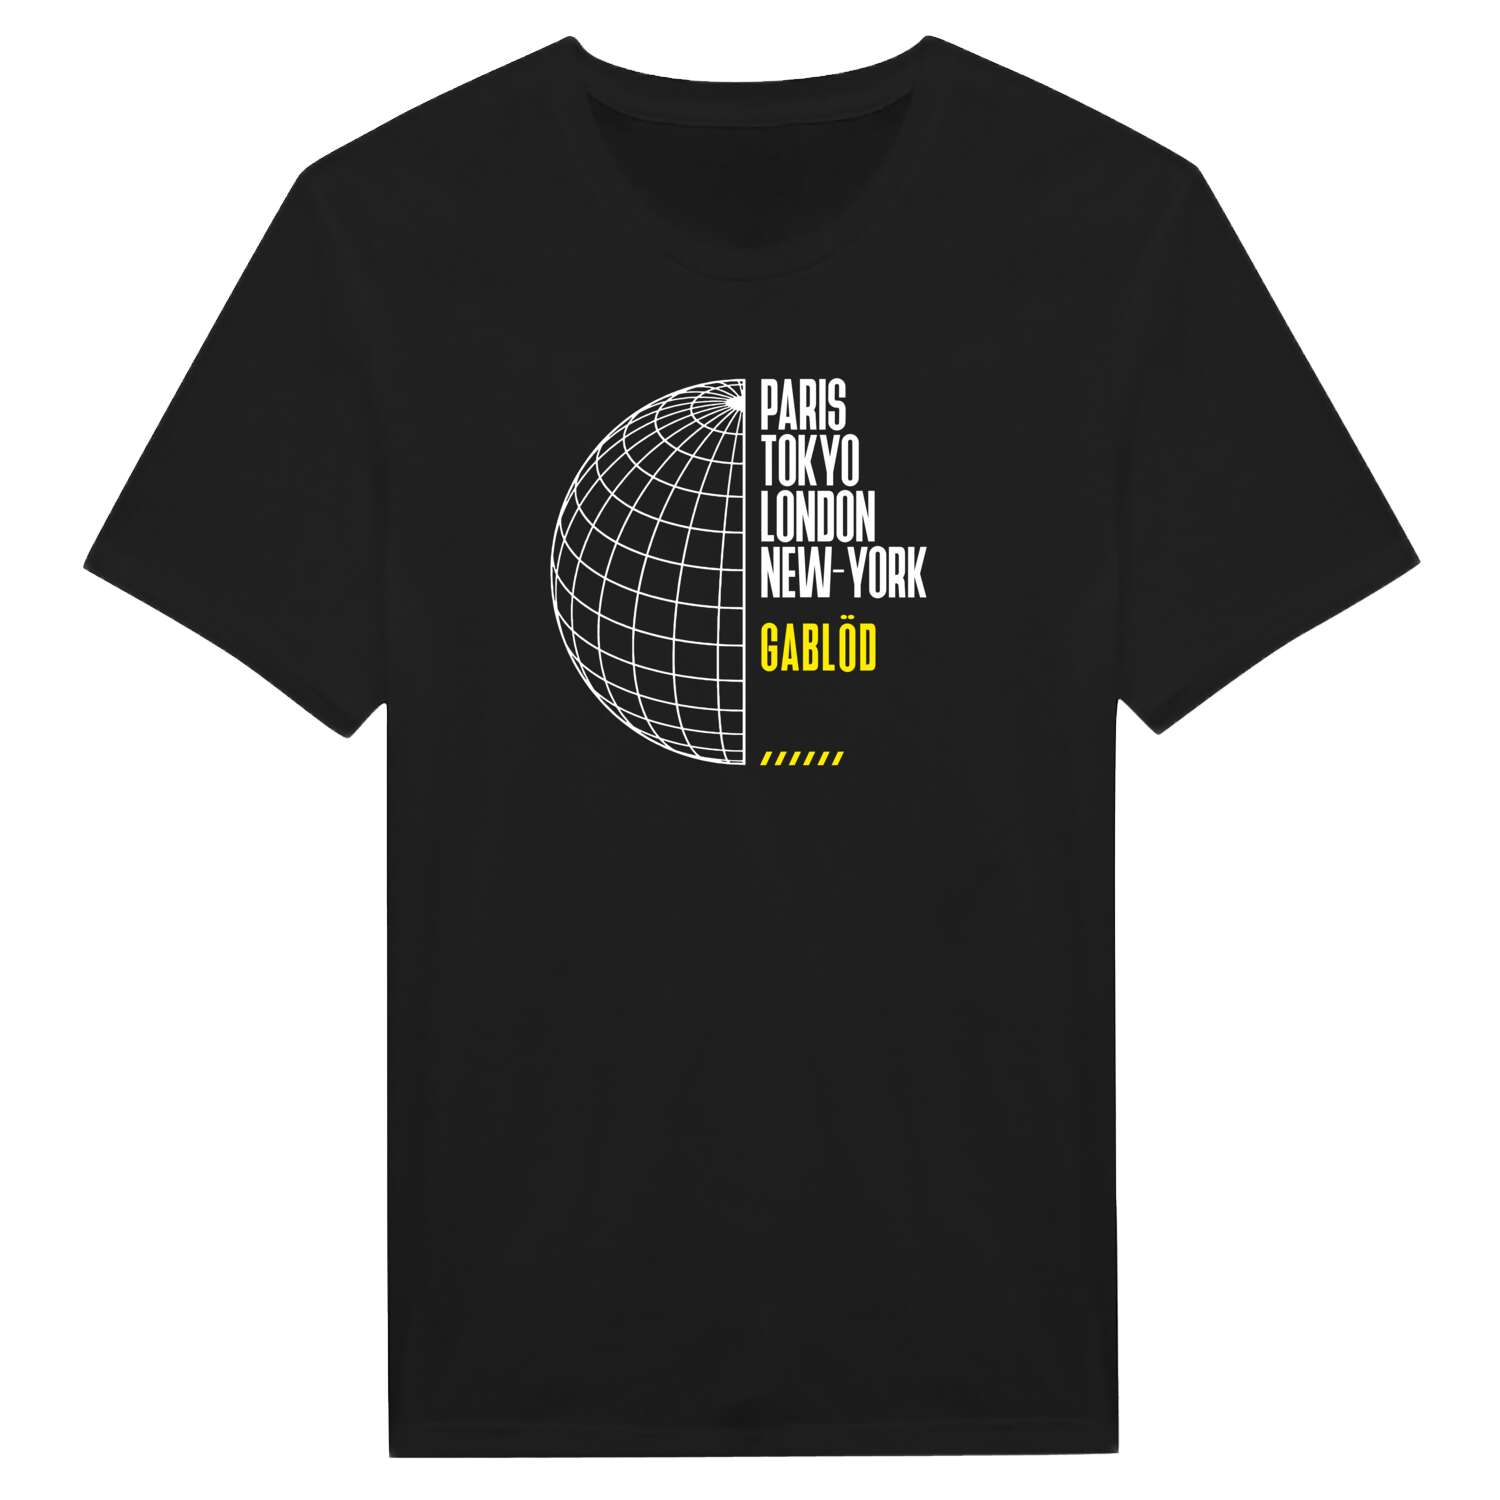 Gablöd T-Shirt »Paris Tokyo London«